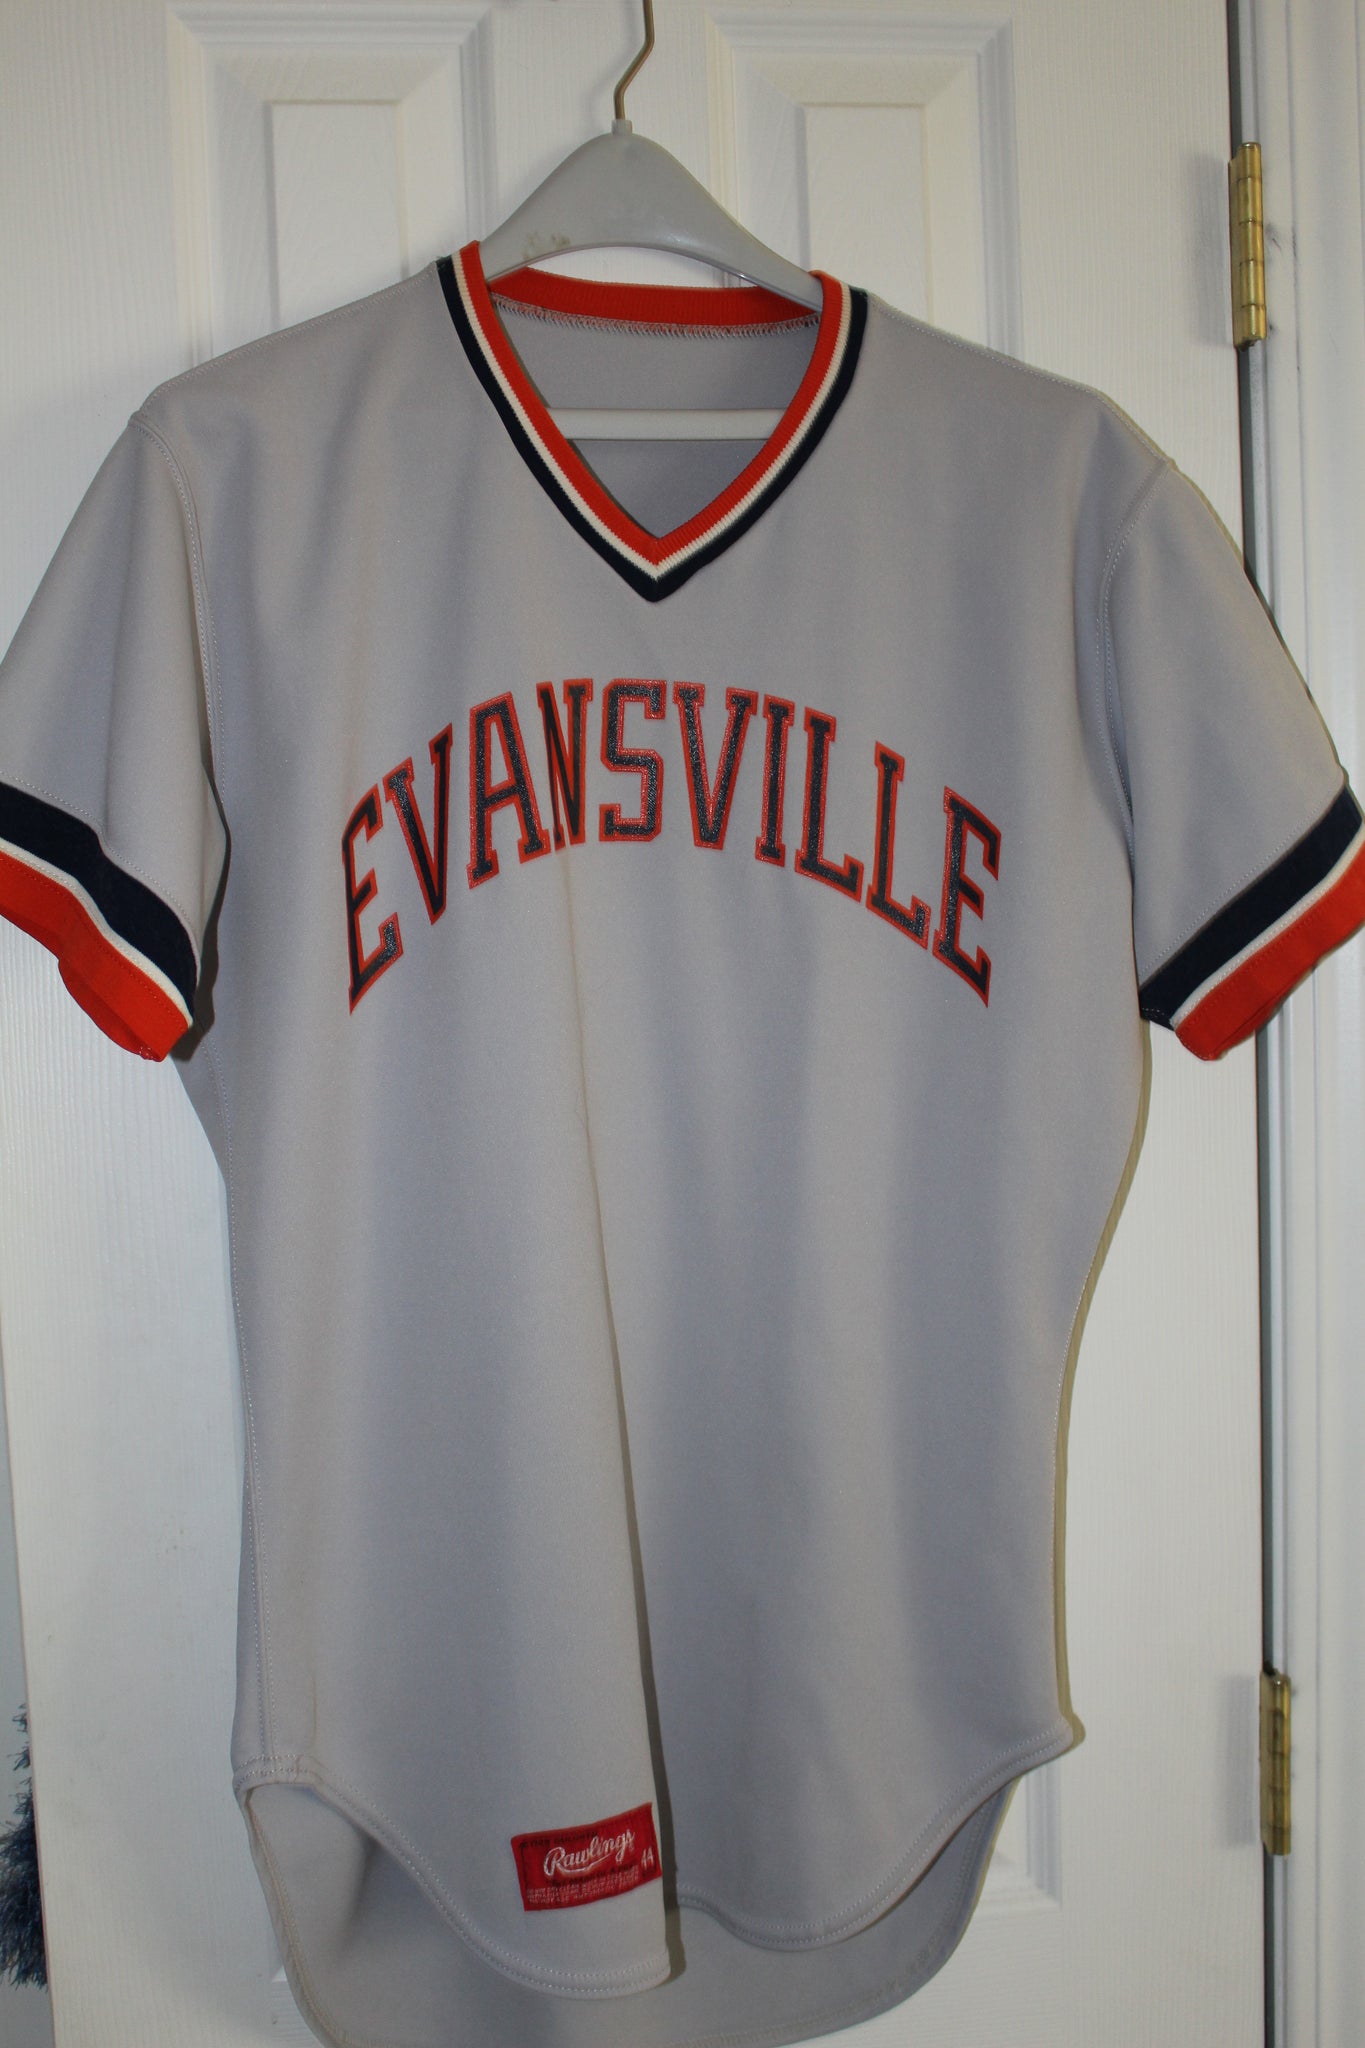 evansville baseball jersey